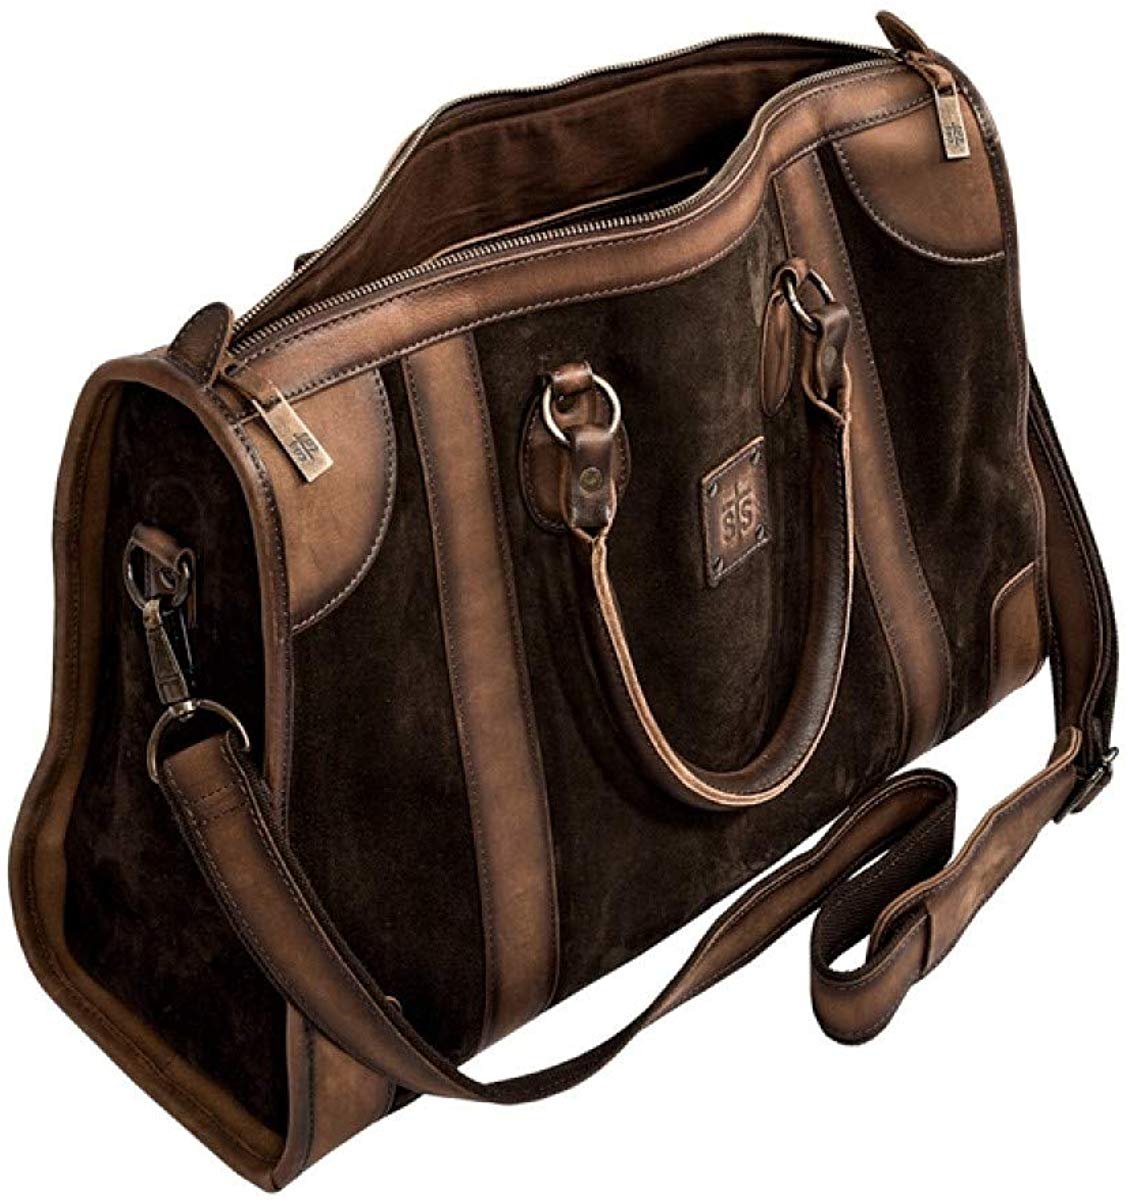 STS Ranchwear Unisex Heritage Duffel Bag